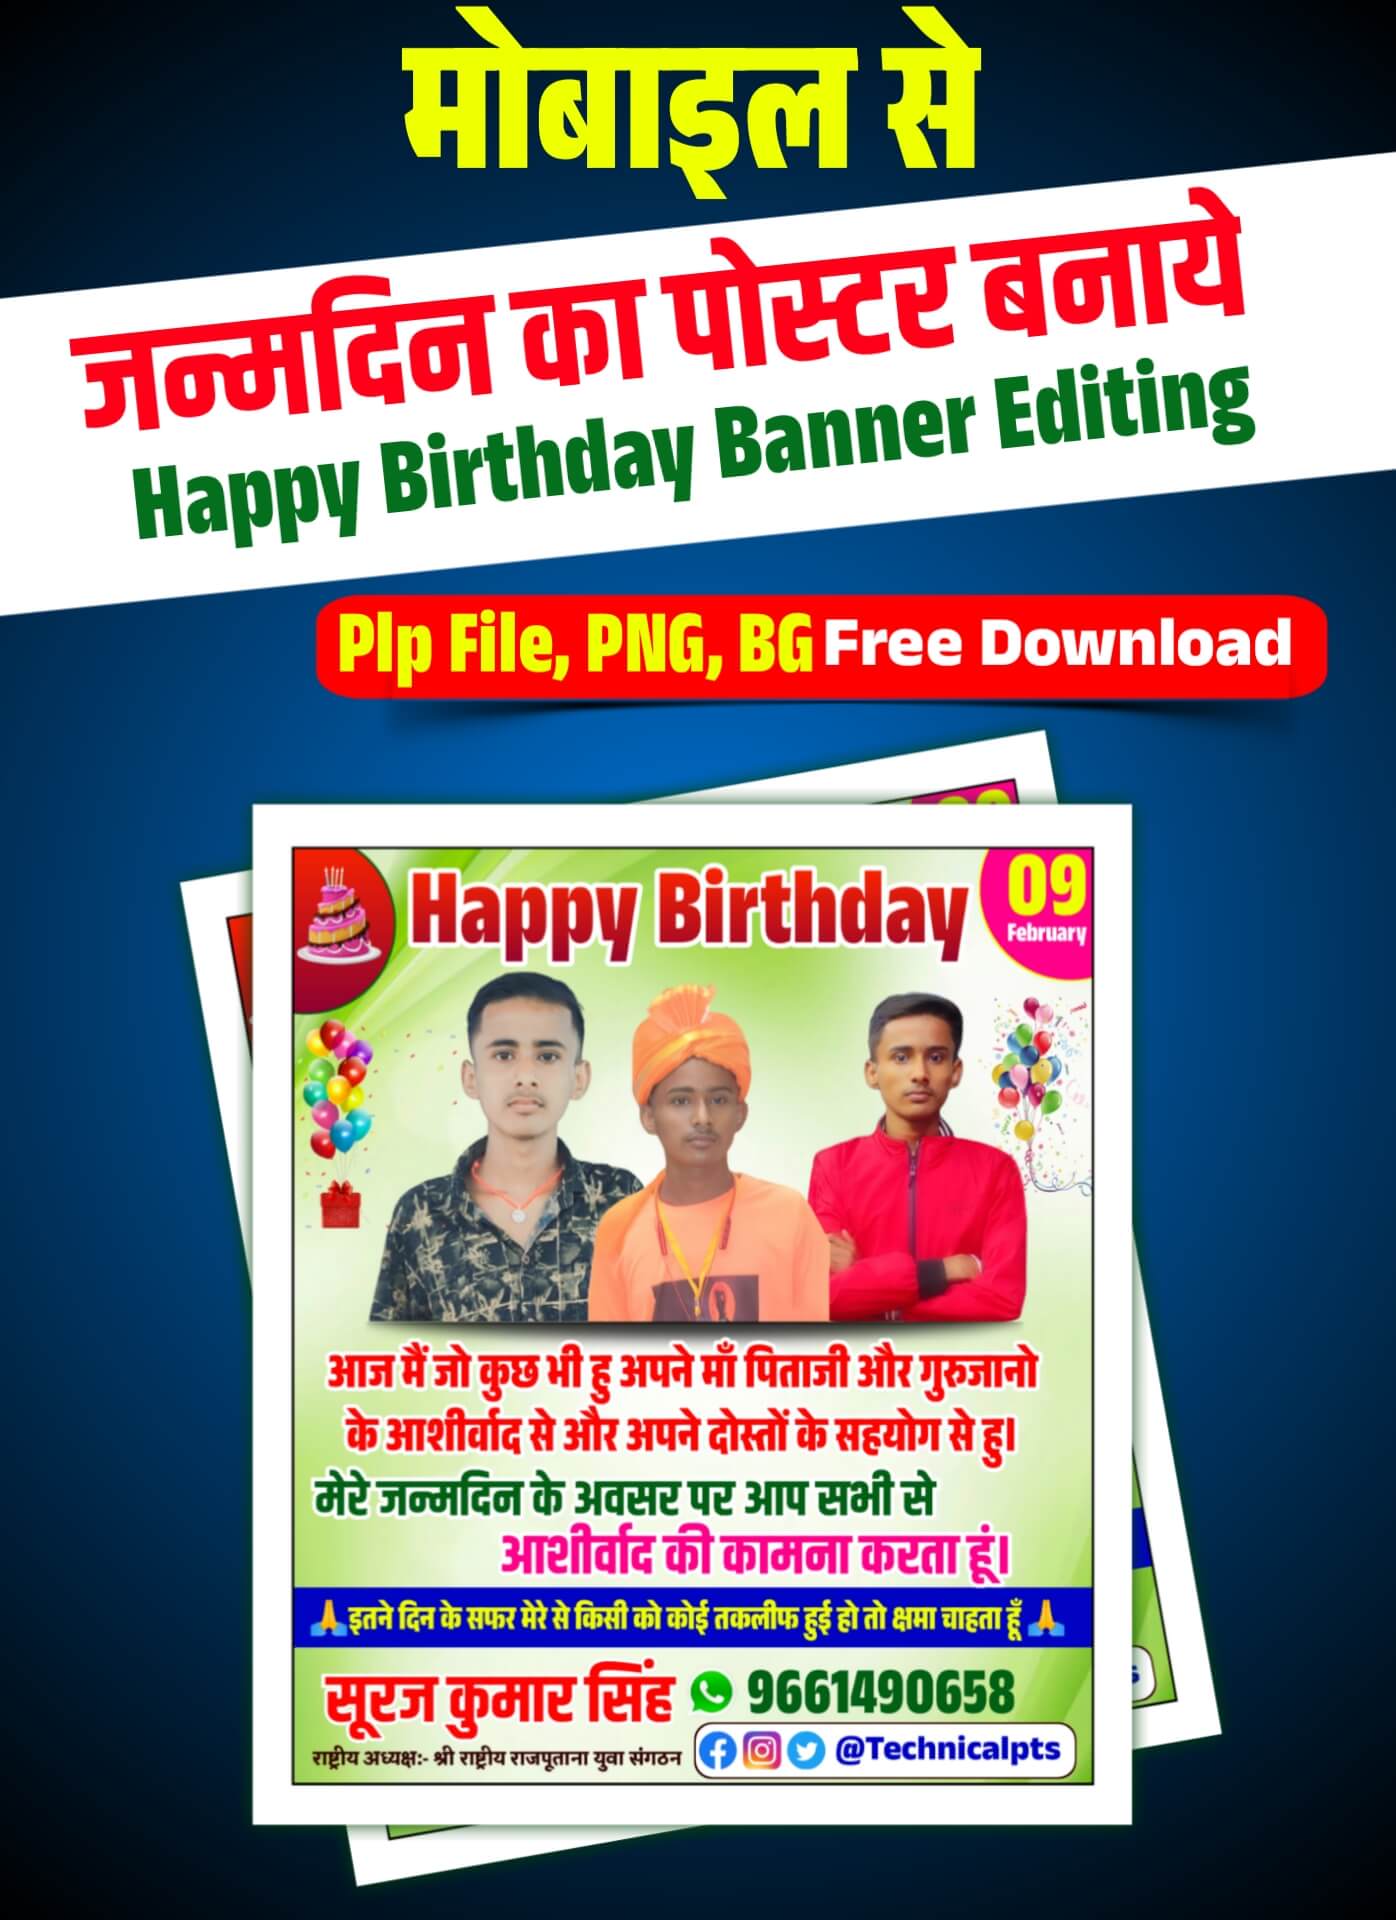 Janmdin ka poster banaye| birthday poster Kaise banaye| happy birthday banner editing plp file download 